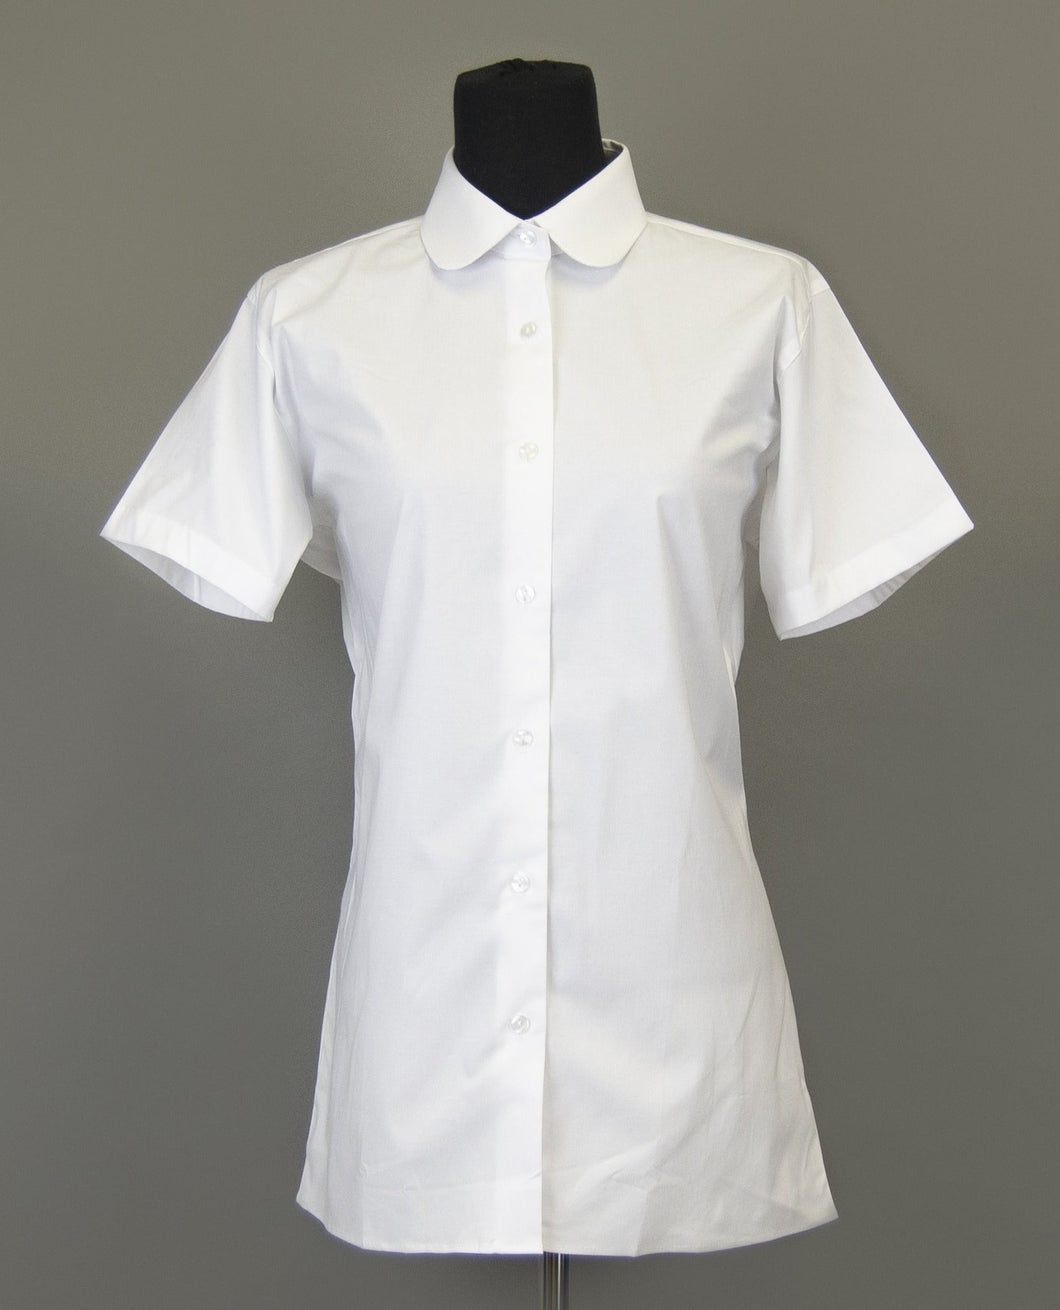 Middle/Senior Blouse - Short-sleeved - Adult Sizes